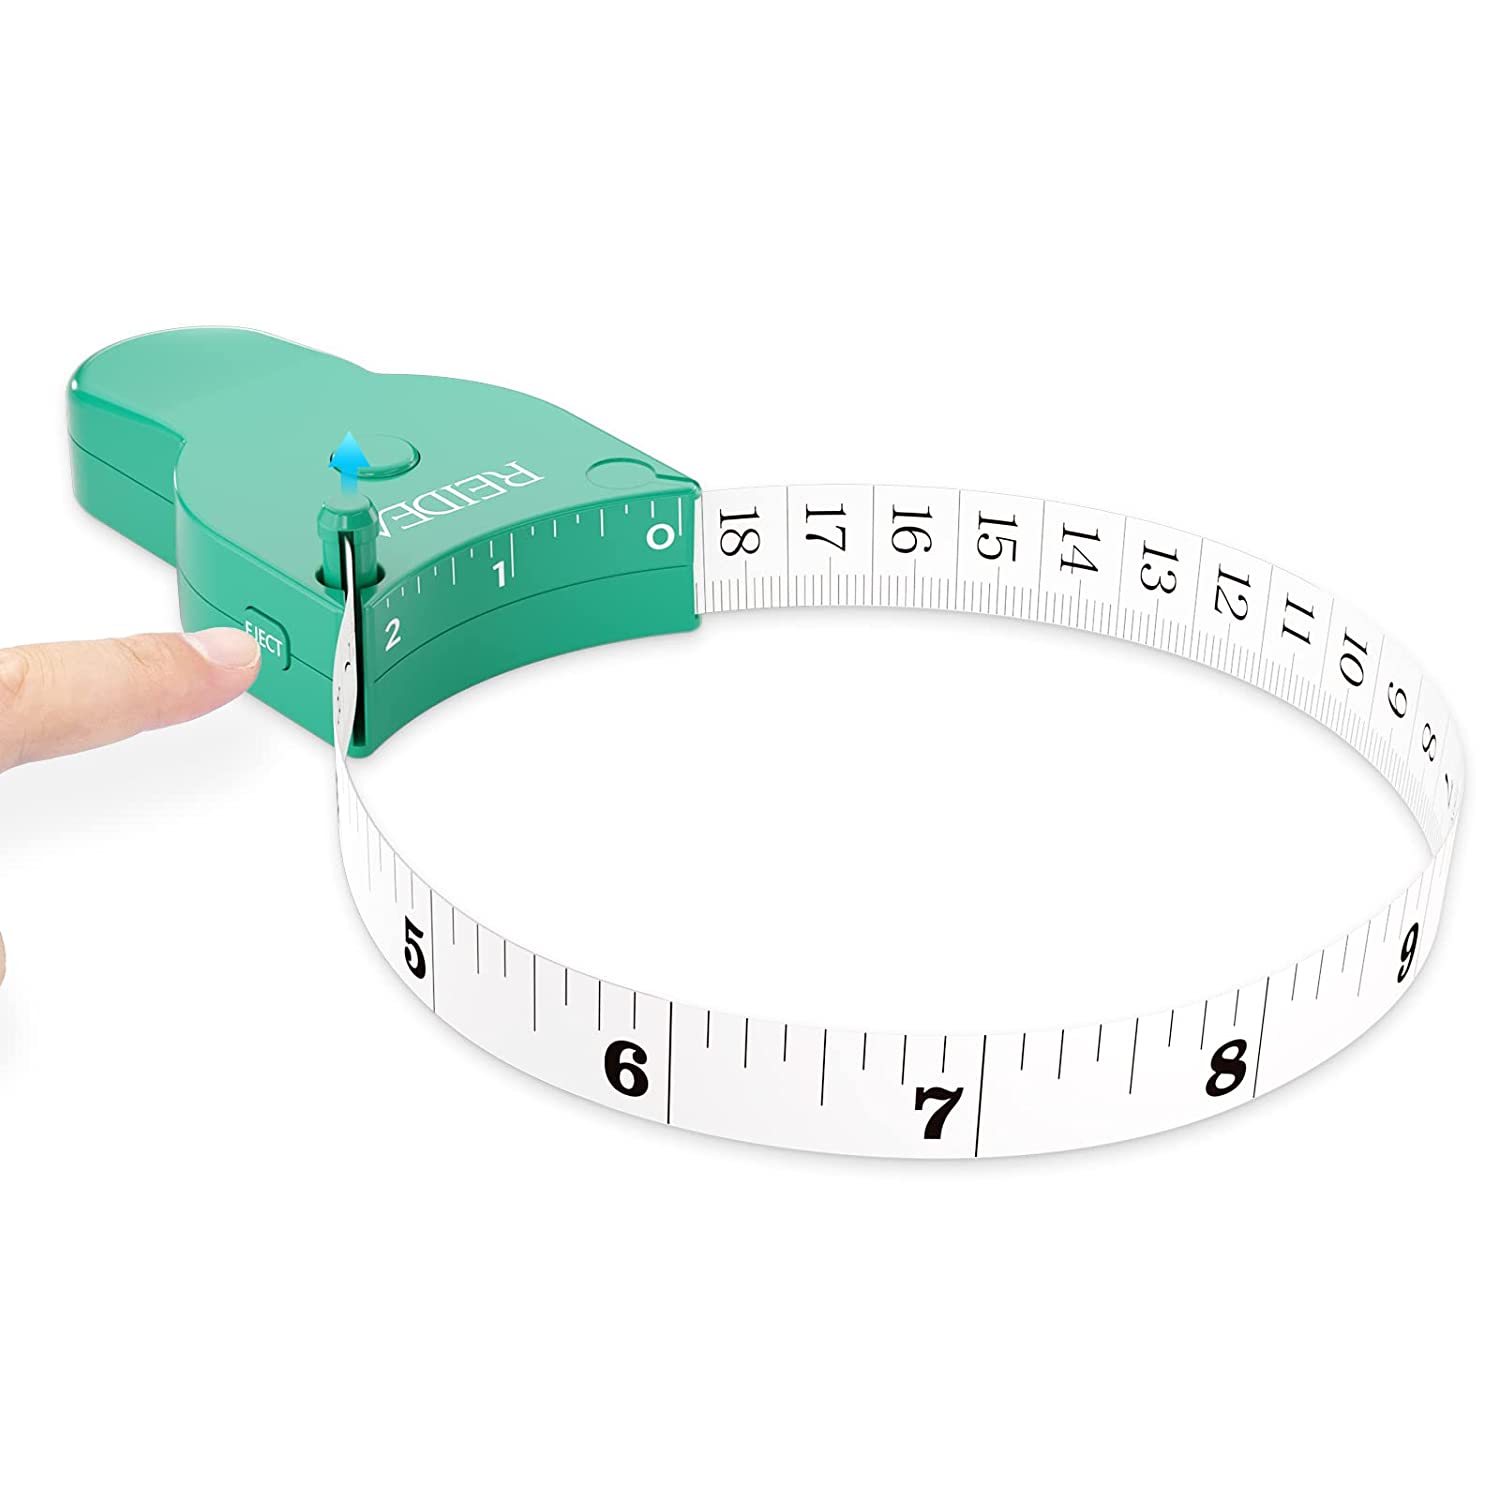 MyoTape Body Tape Measure 